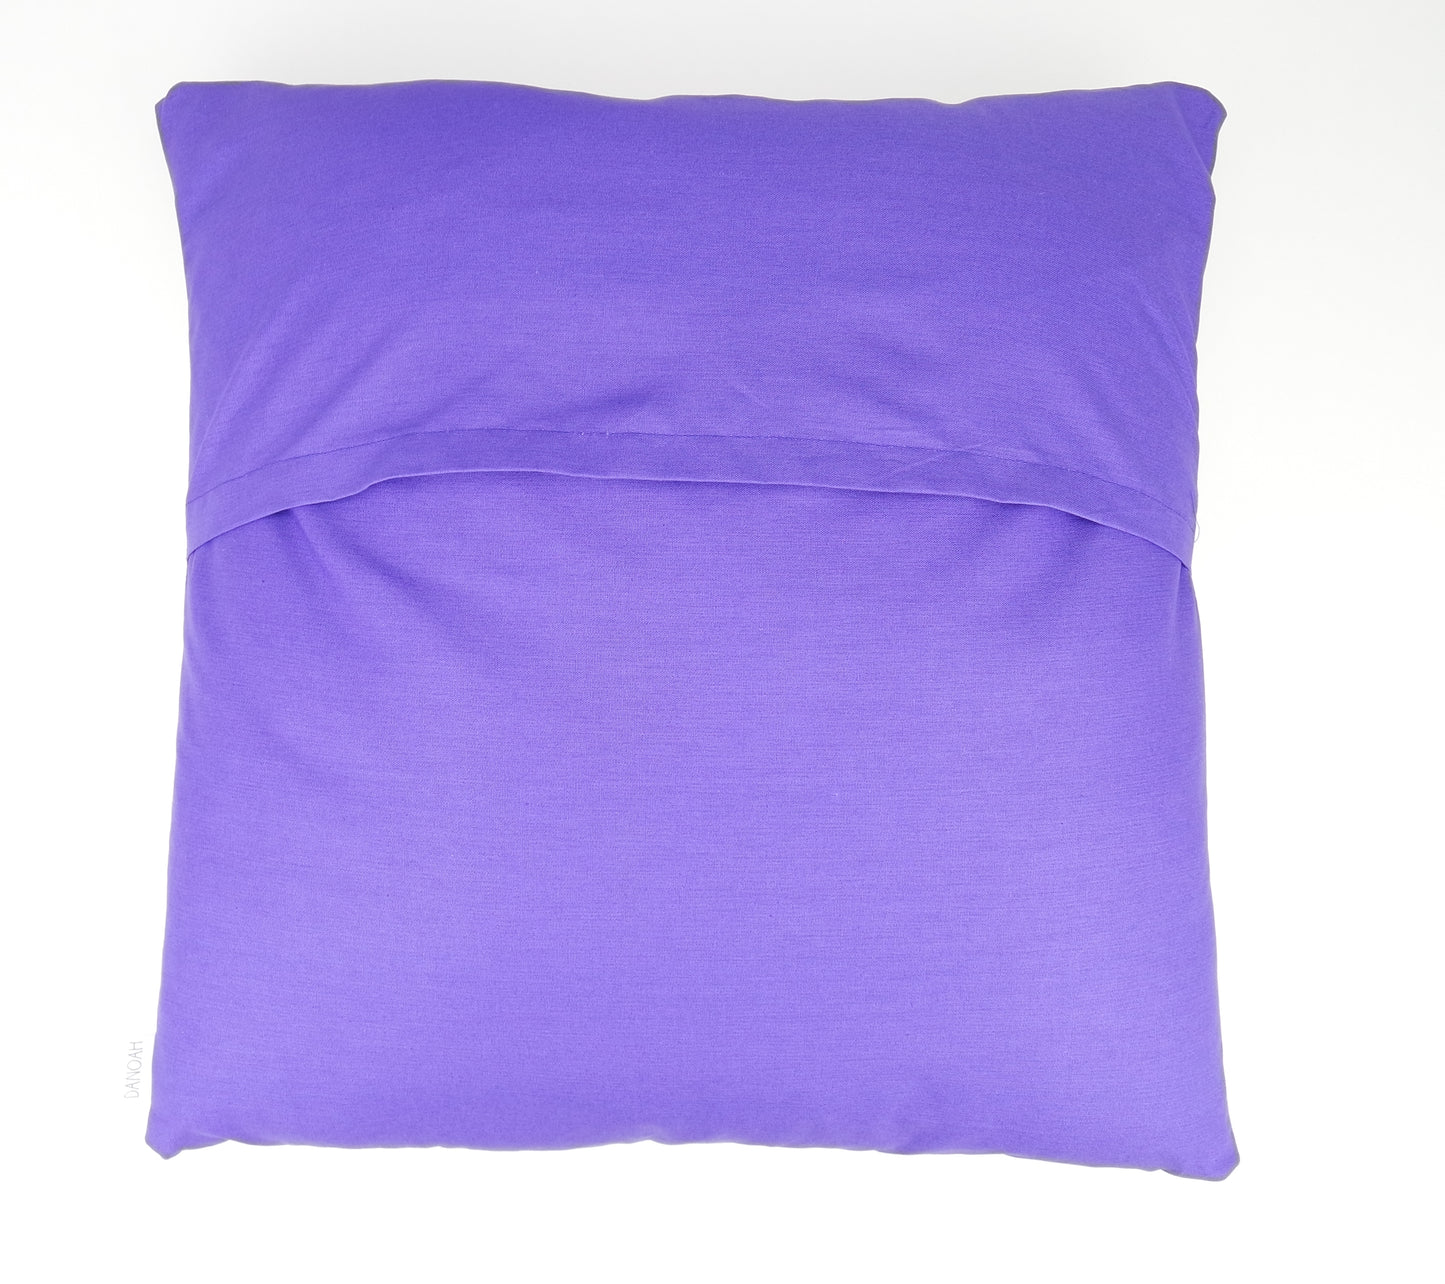 Dreamcatcher Cushion Cover